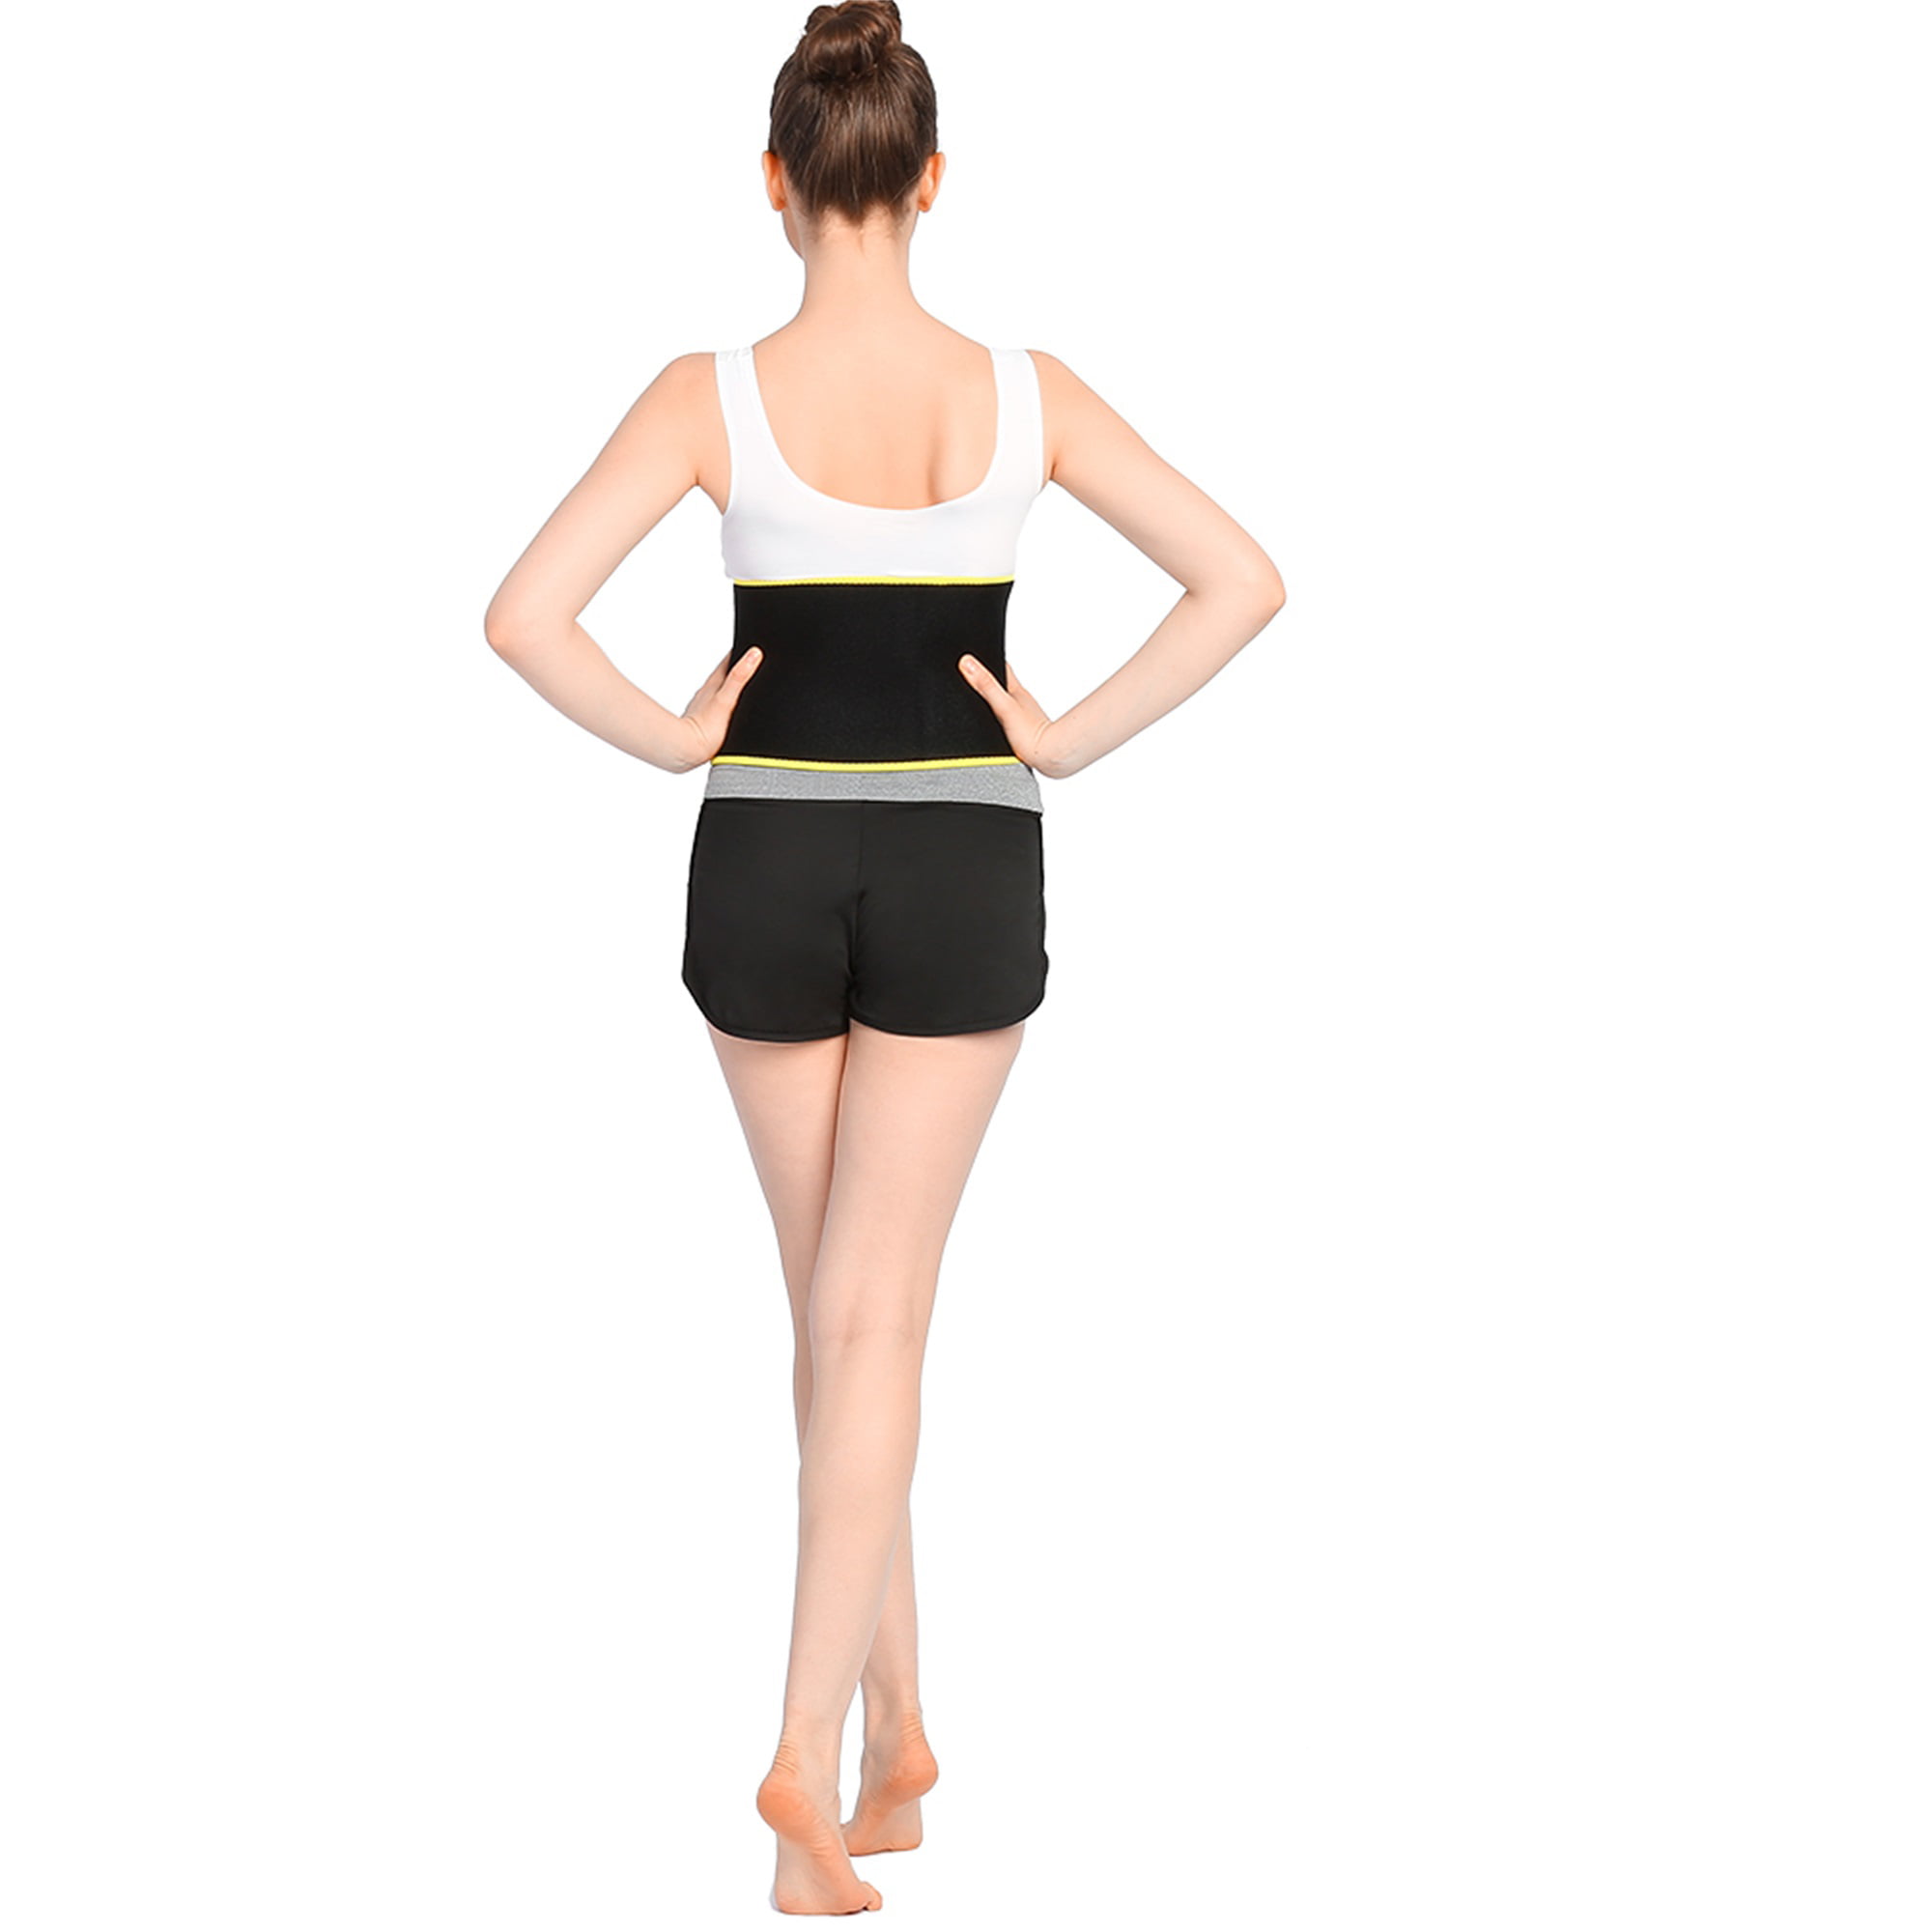 Yoga Slim Fit WAIST TRIMMER TRAINER BELT Weight Loss Burn Fat Body Shaper Girdle 